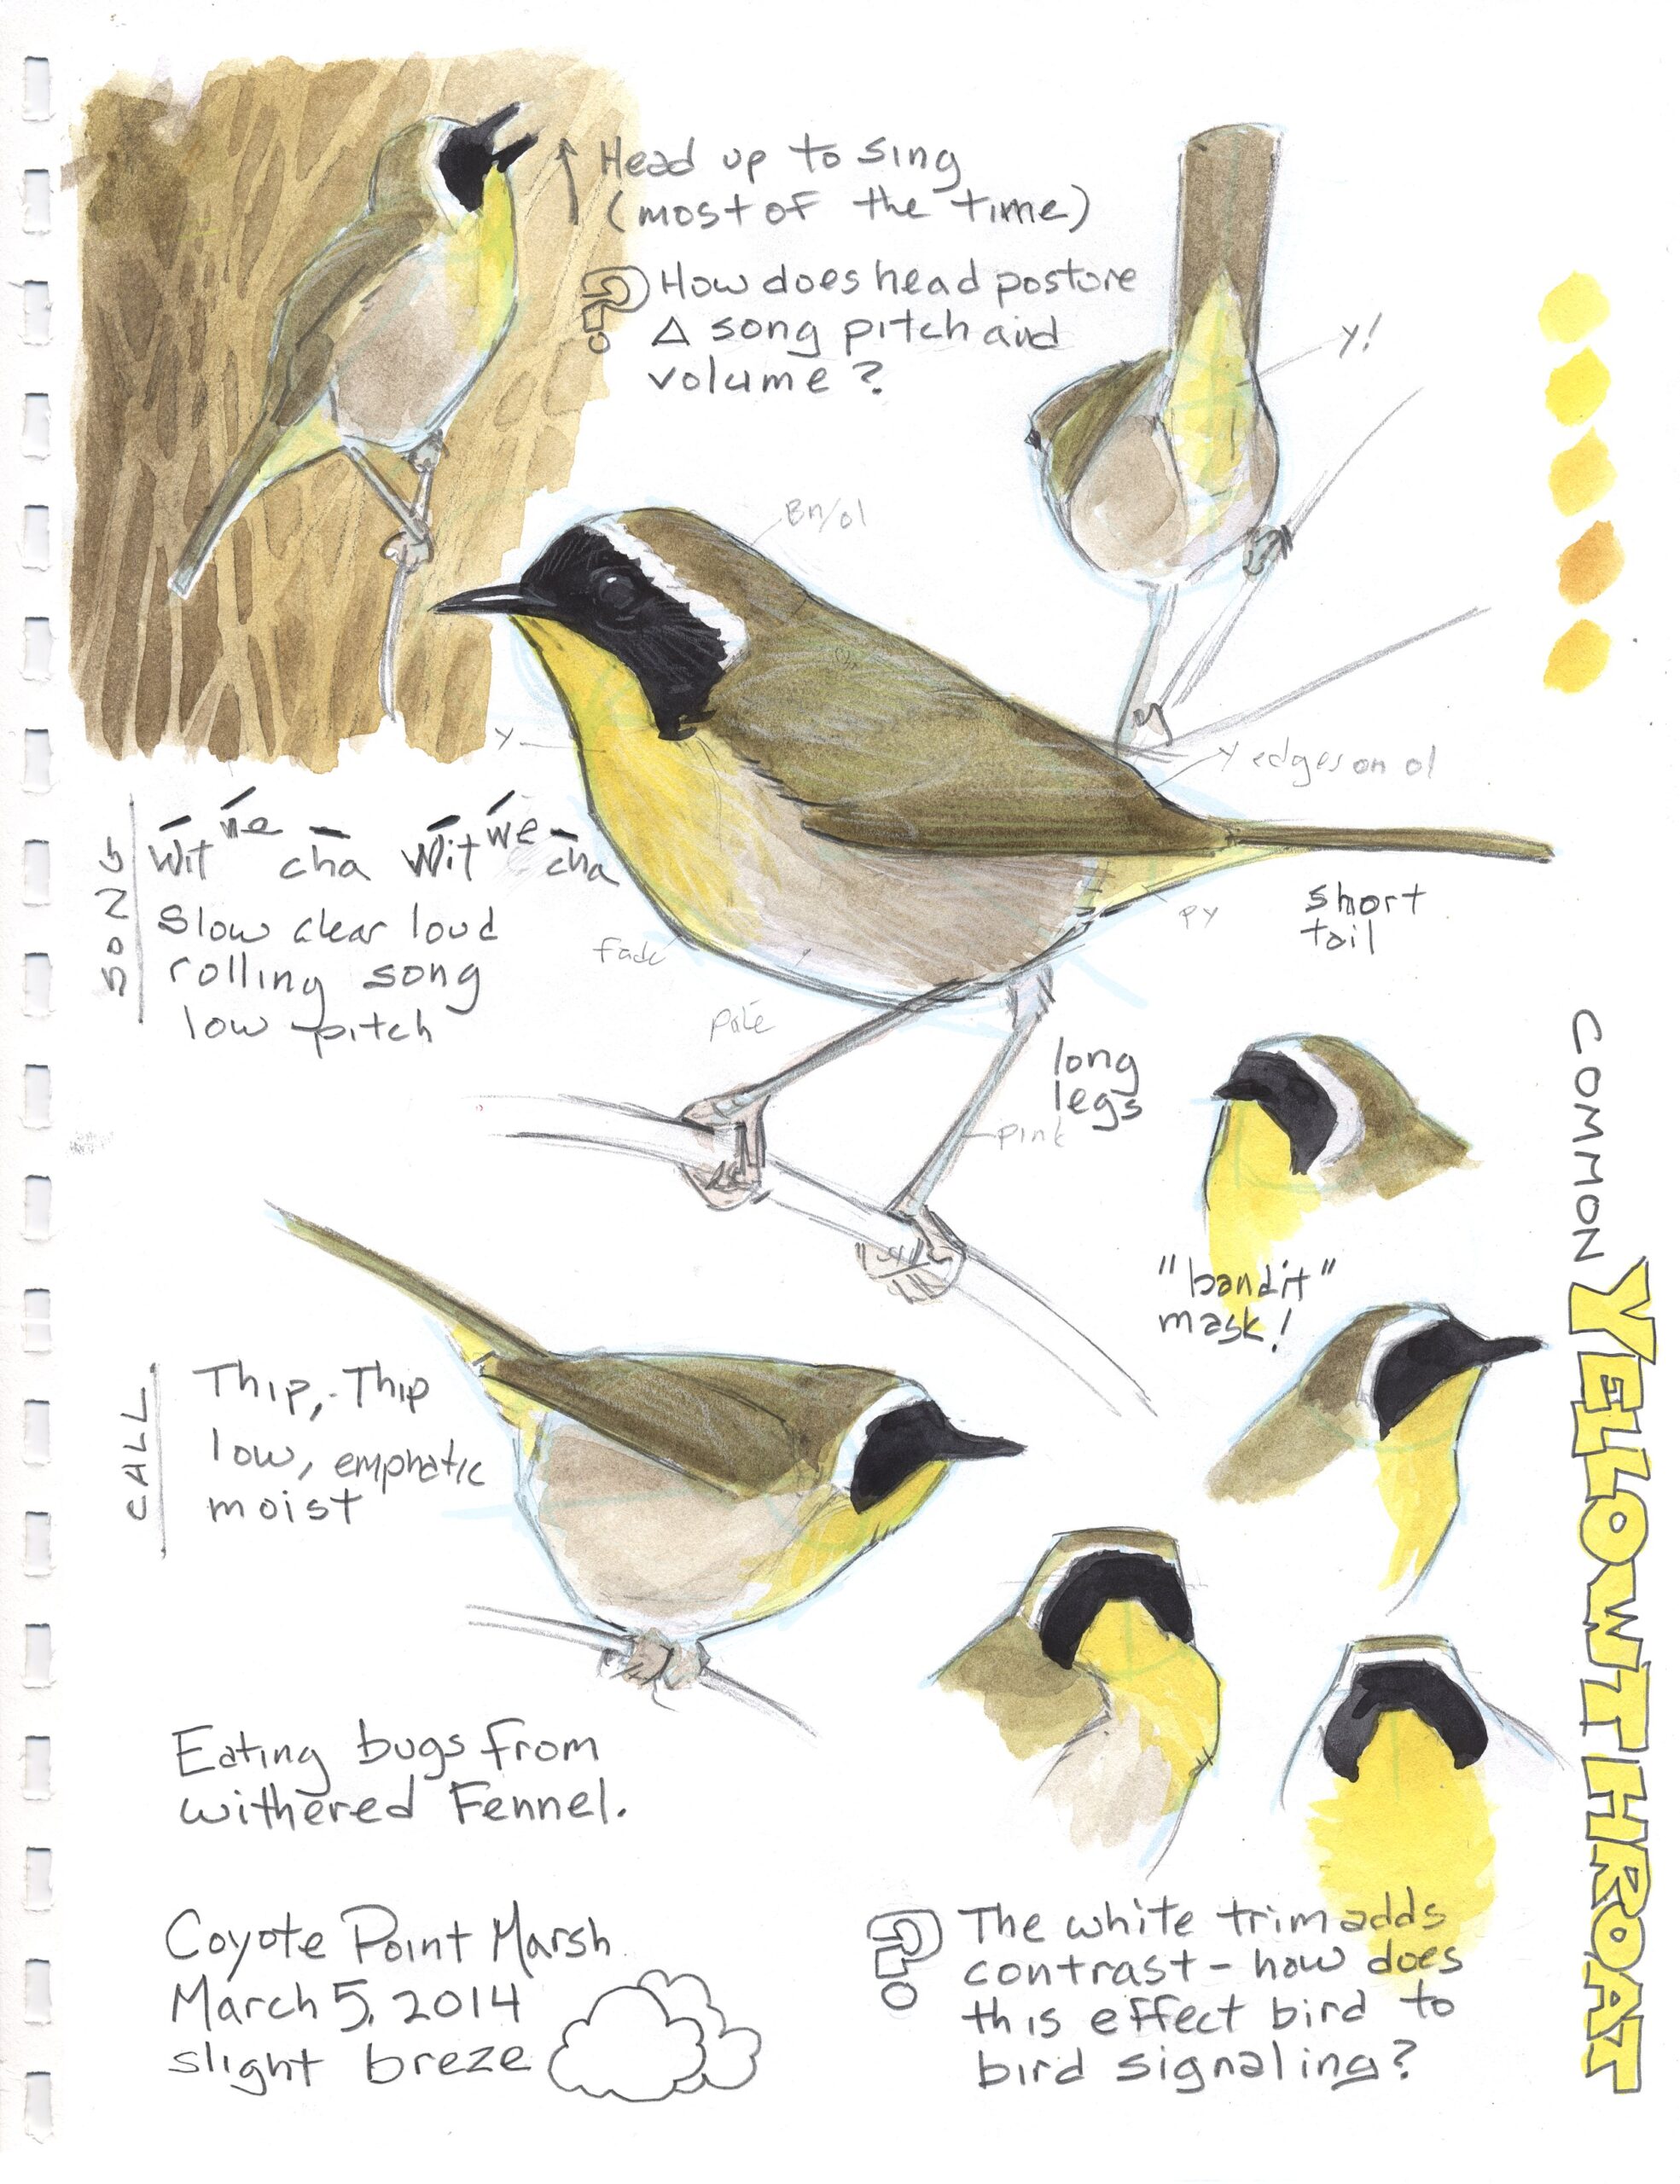 Speed Drawing Birds • John Muir Laws